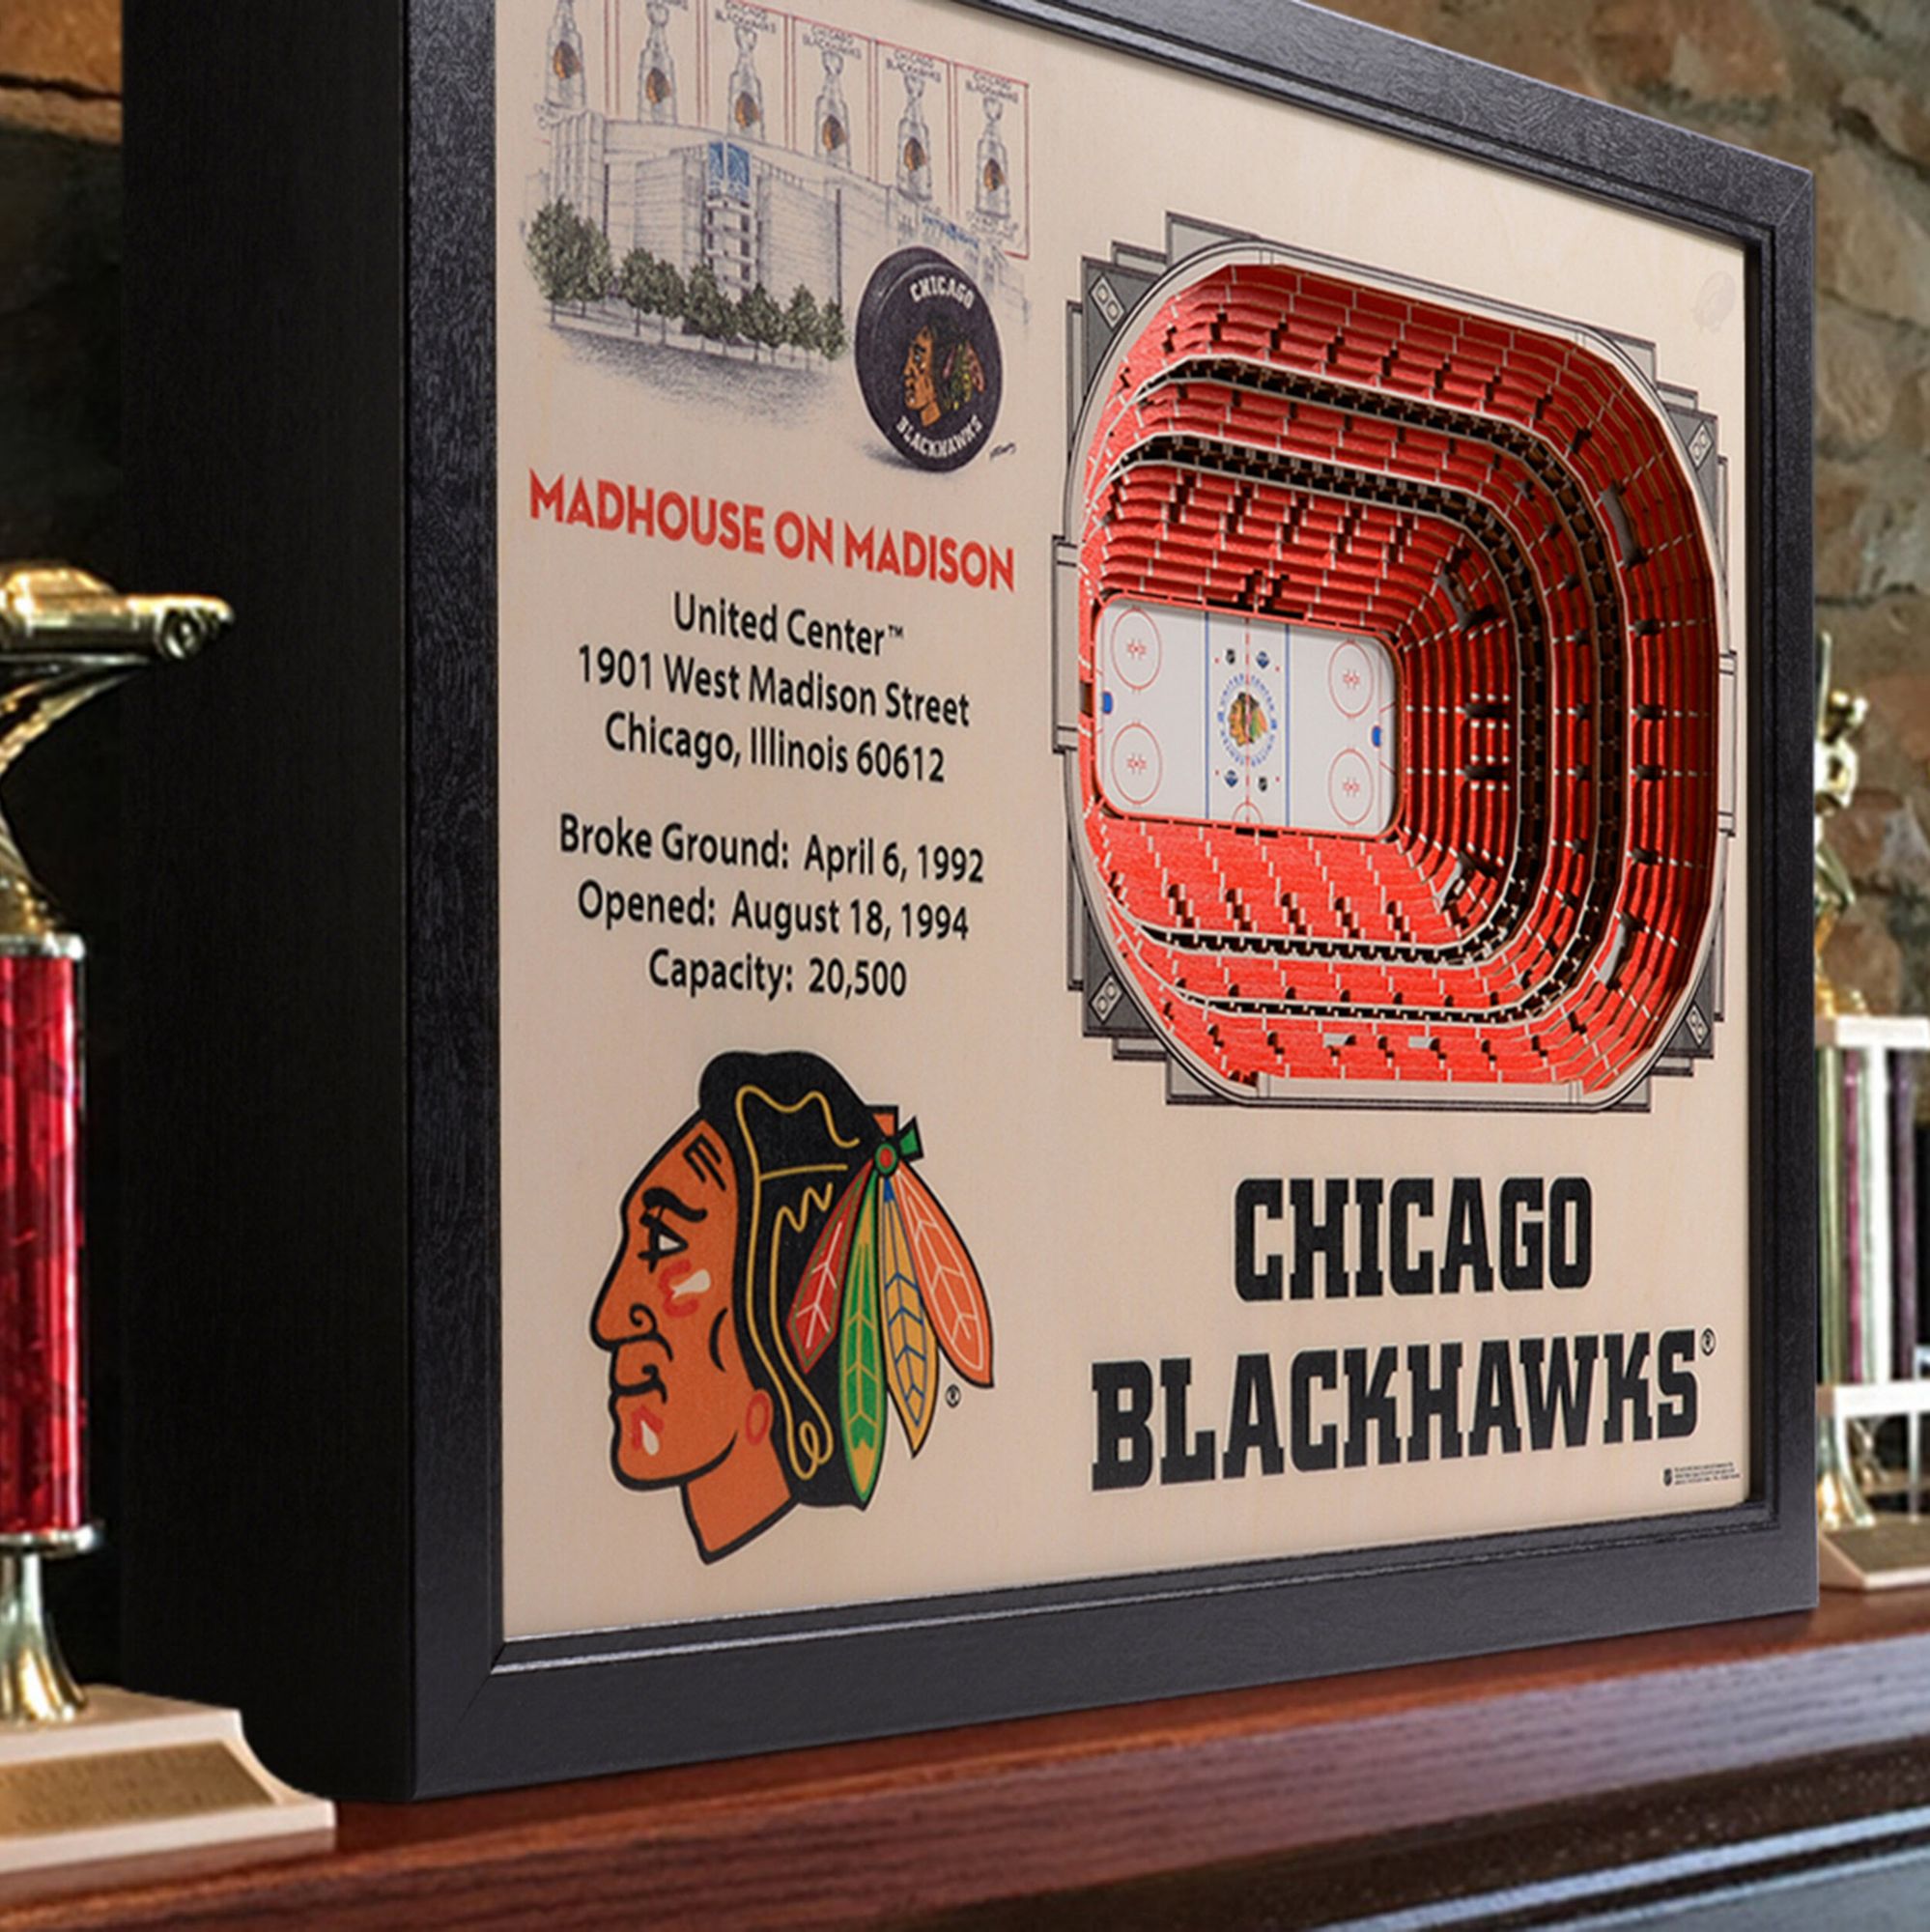 You the Fan Chicago Blackhawks 25-Layer StadiumViews 3D Wall Art